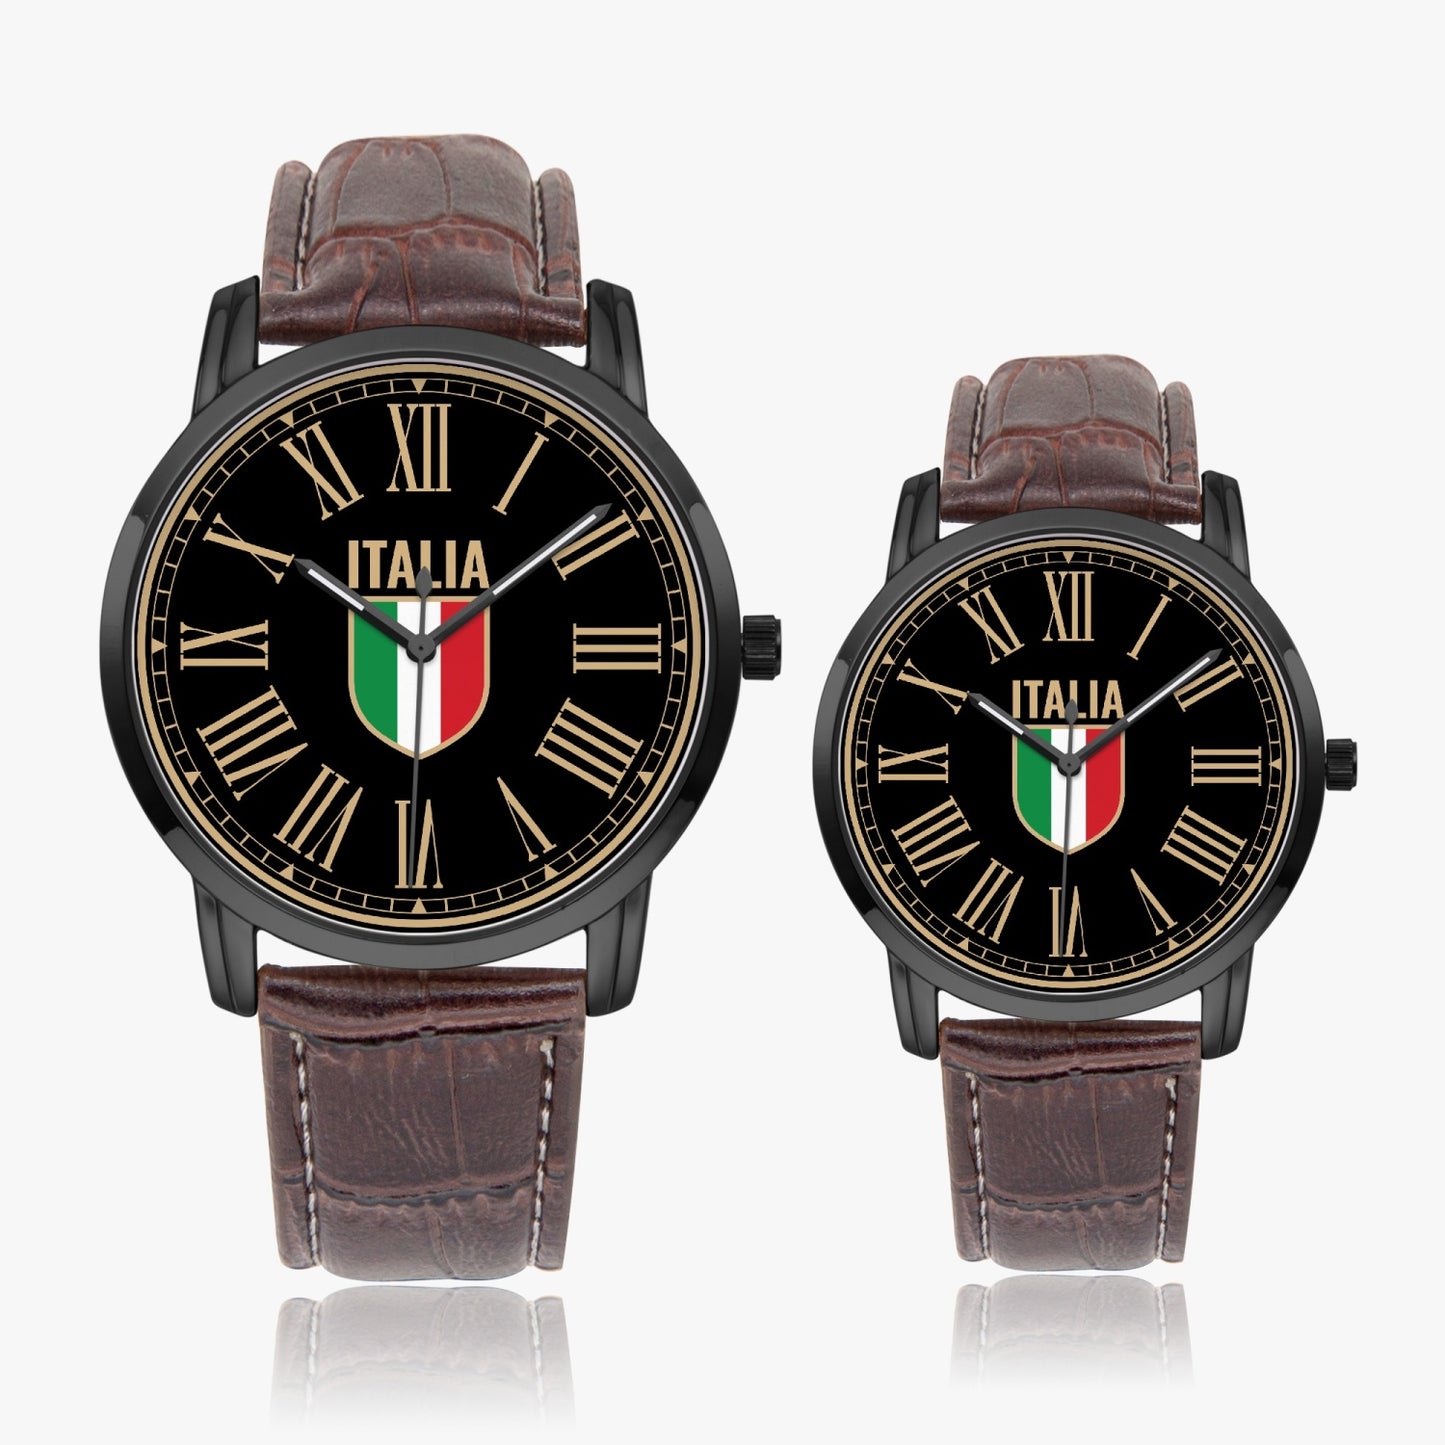 Stemma Italia - Premium Quartz Watch Stainless Steel Case & Leather Bands